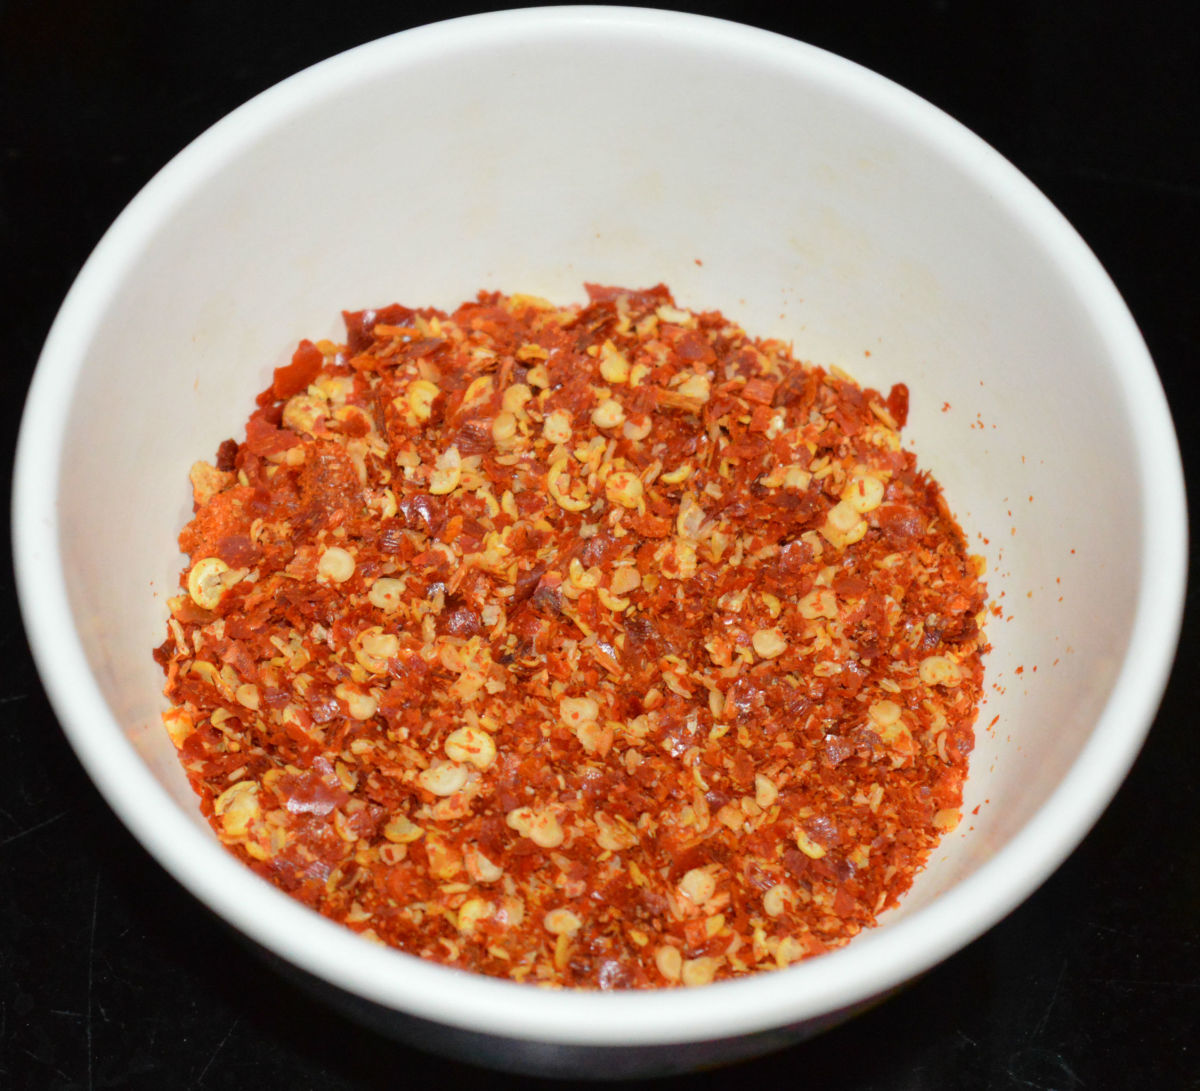 How to Make Chili Flakes at Home - Delishably